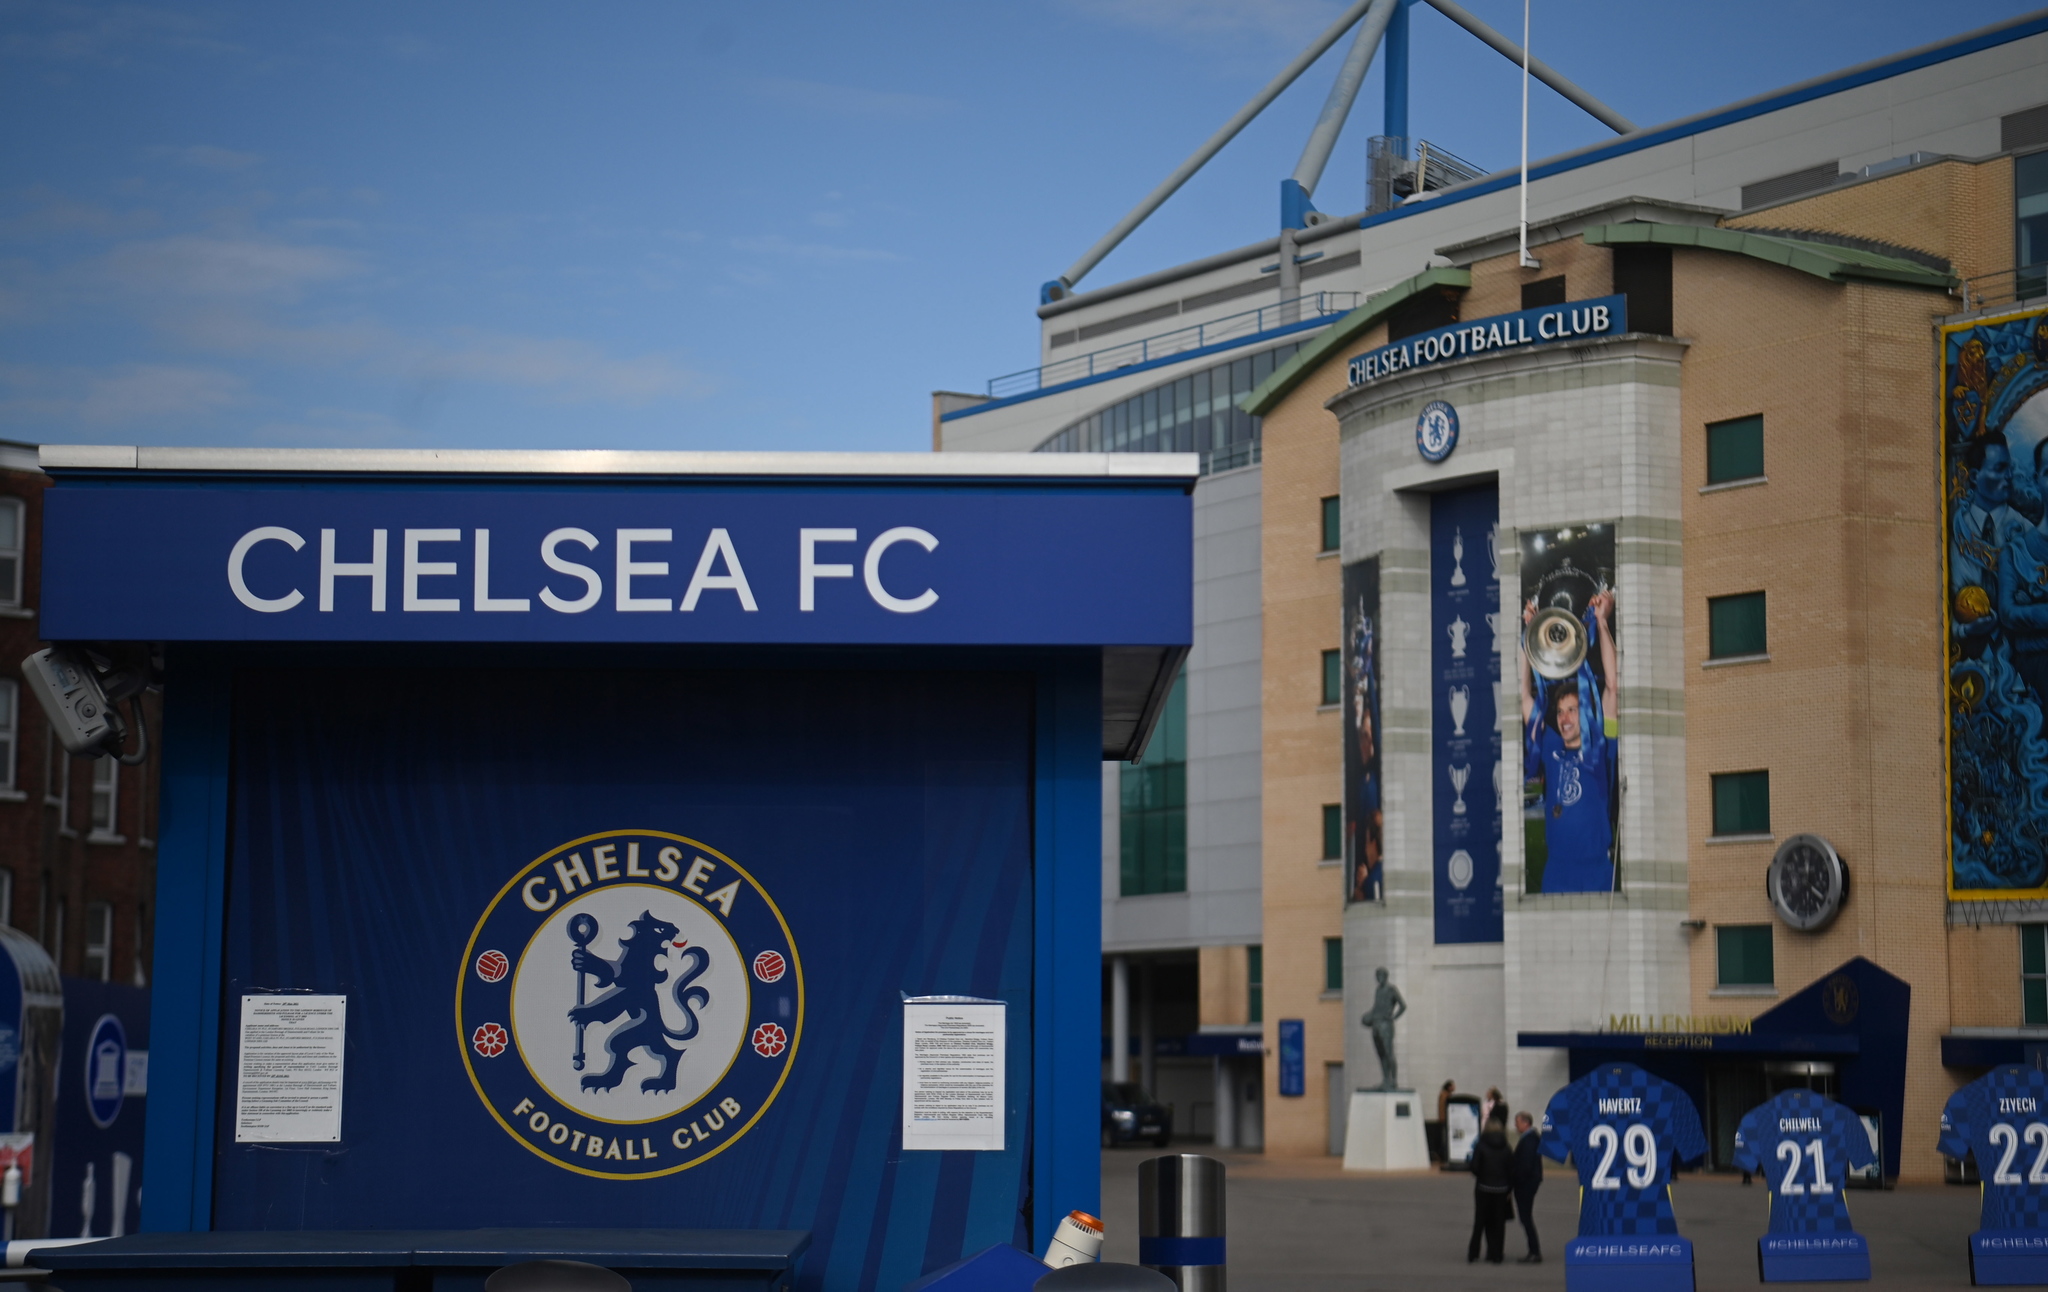 Chelsea Football Club's ground at Stamford Bridge